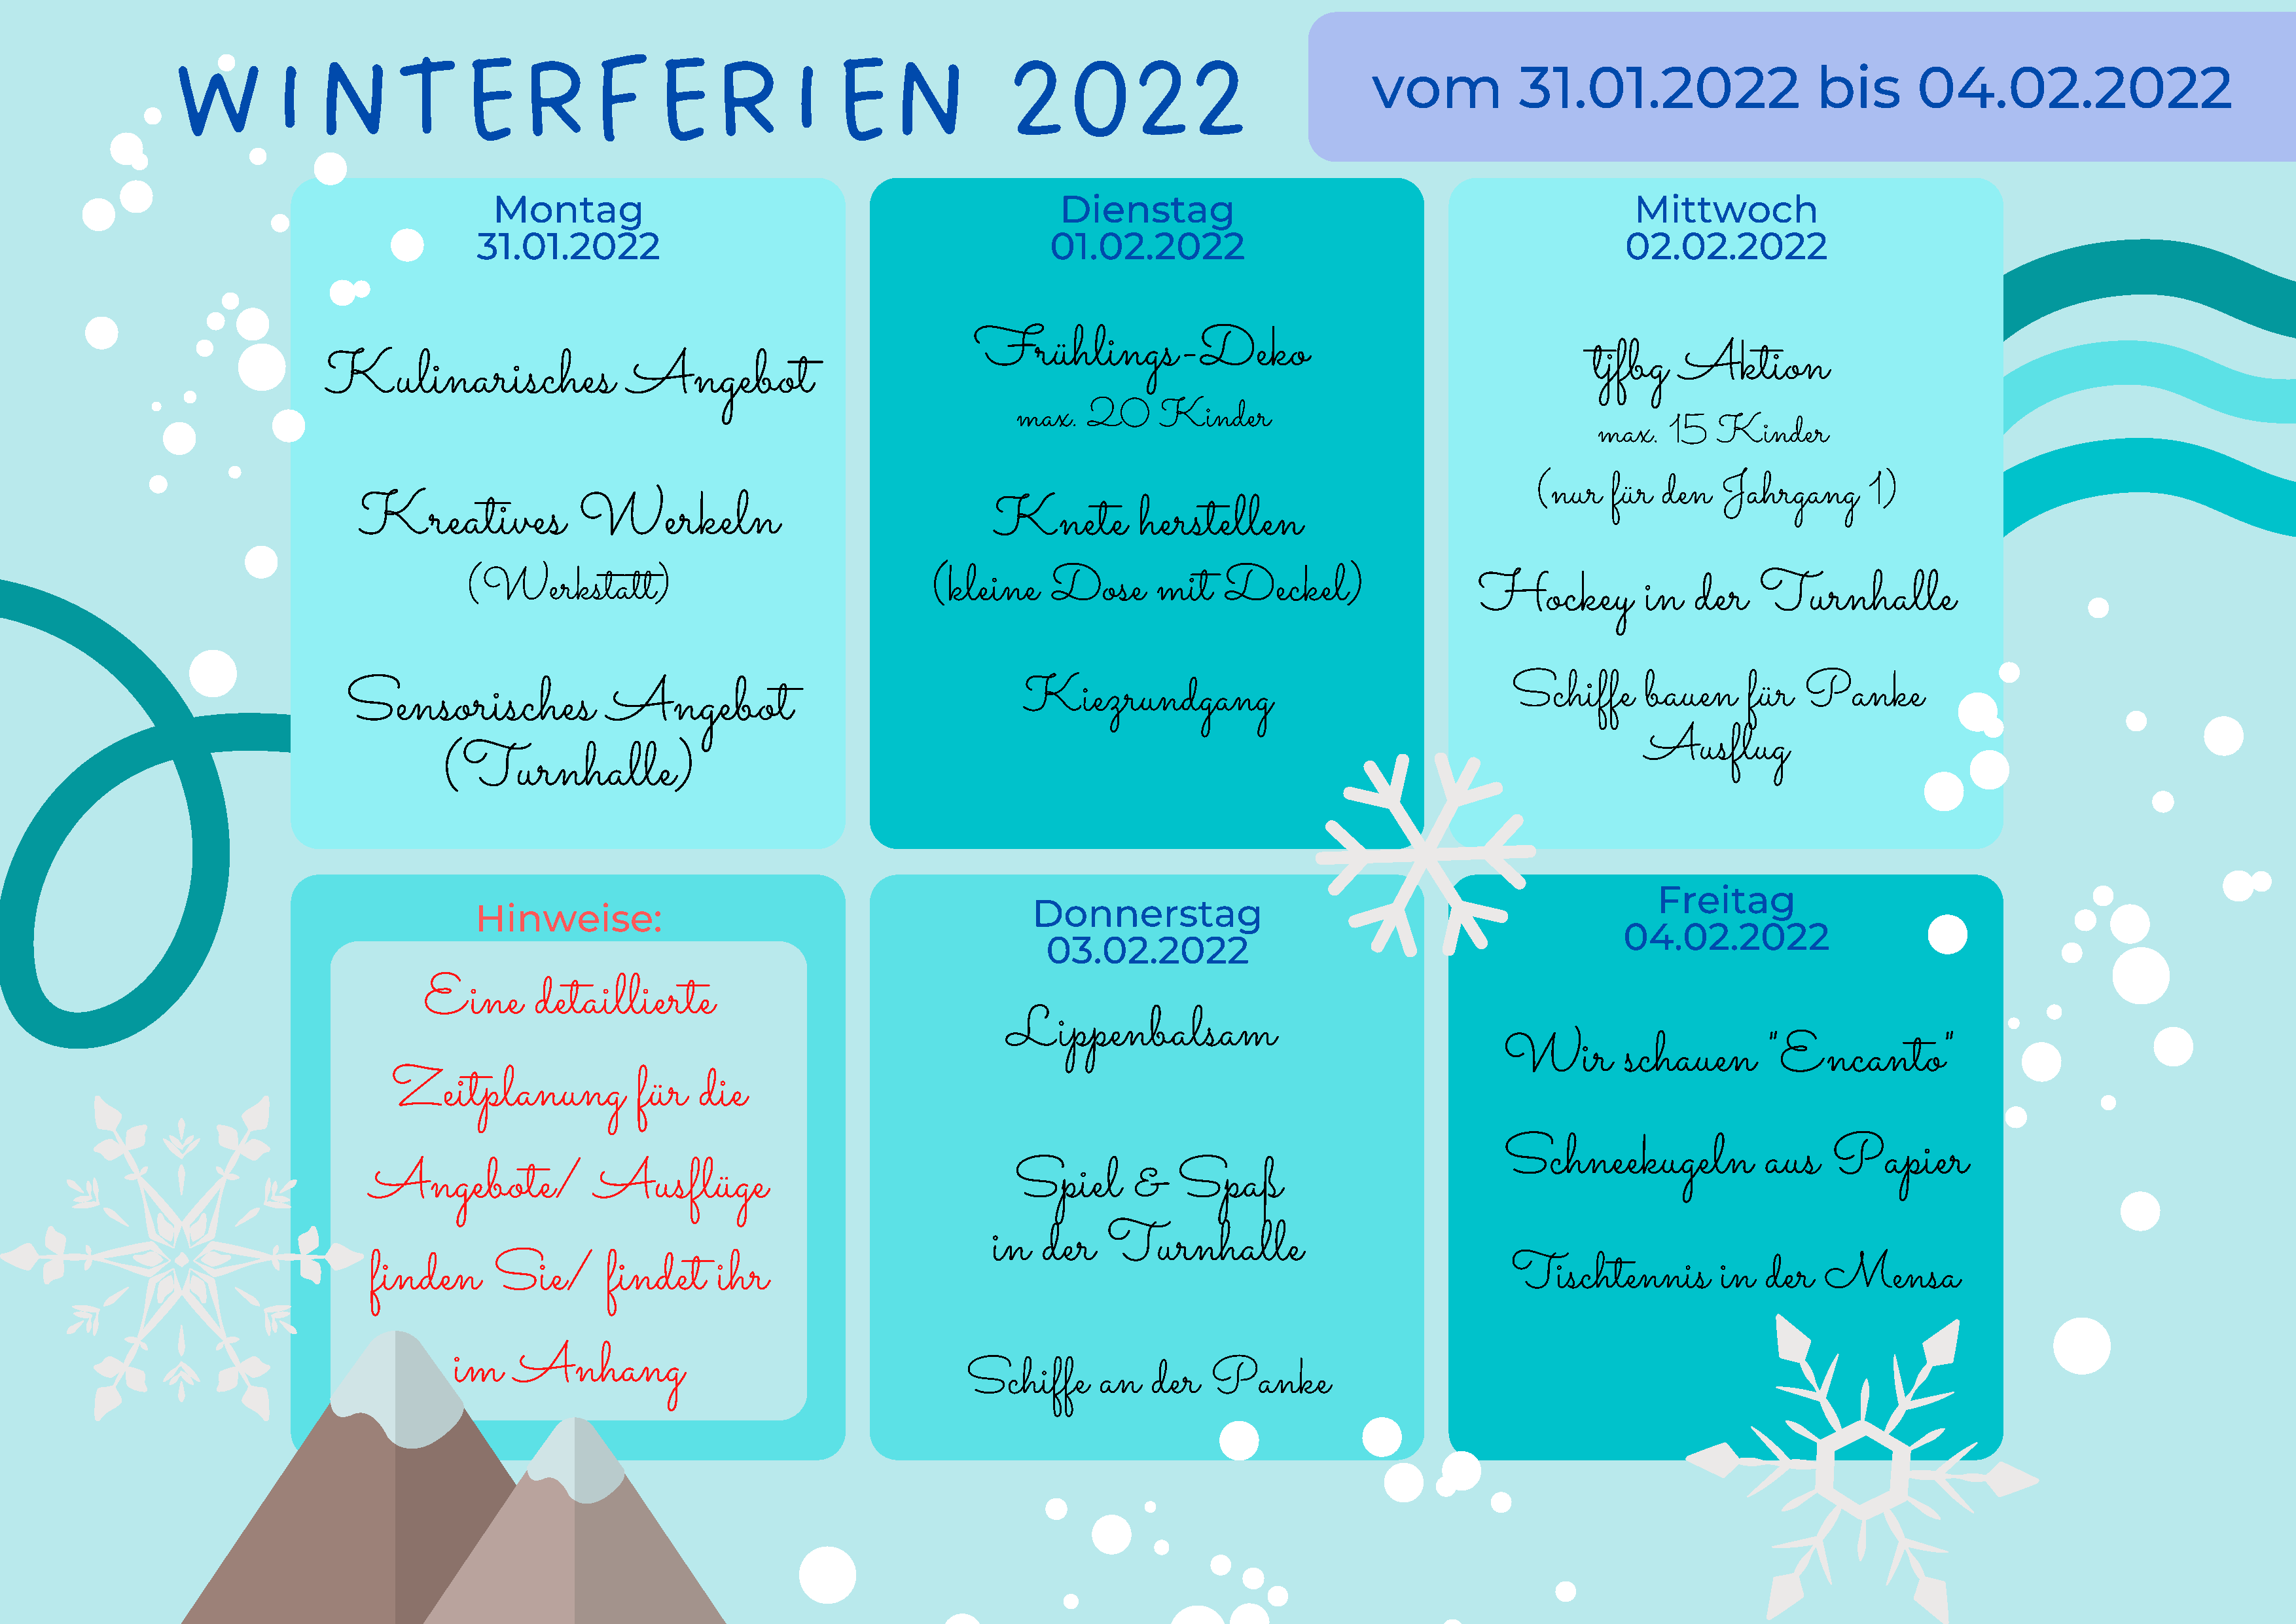 Winterferien 2022 Angebote final_Page1